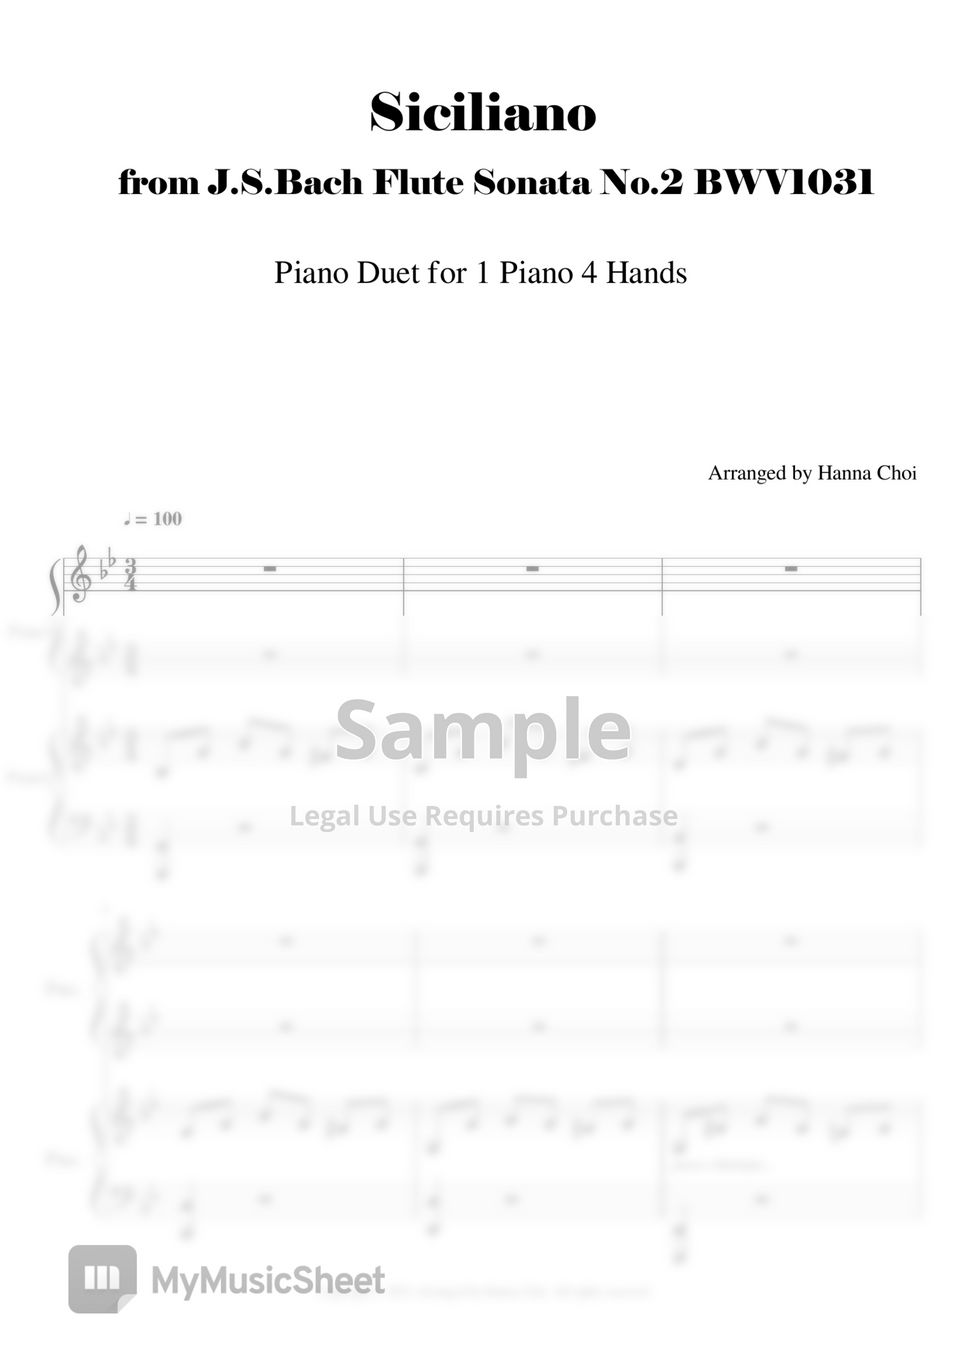 J.S.Bach 바흐 - [Piano Duet] "Siciliano" 시칠리아노 from Flute Sonata (1piano 4 hands)